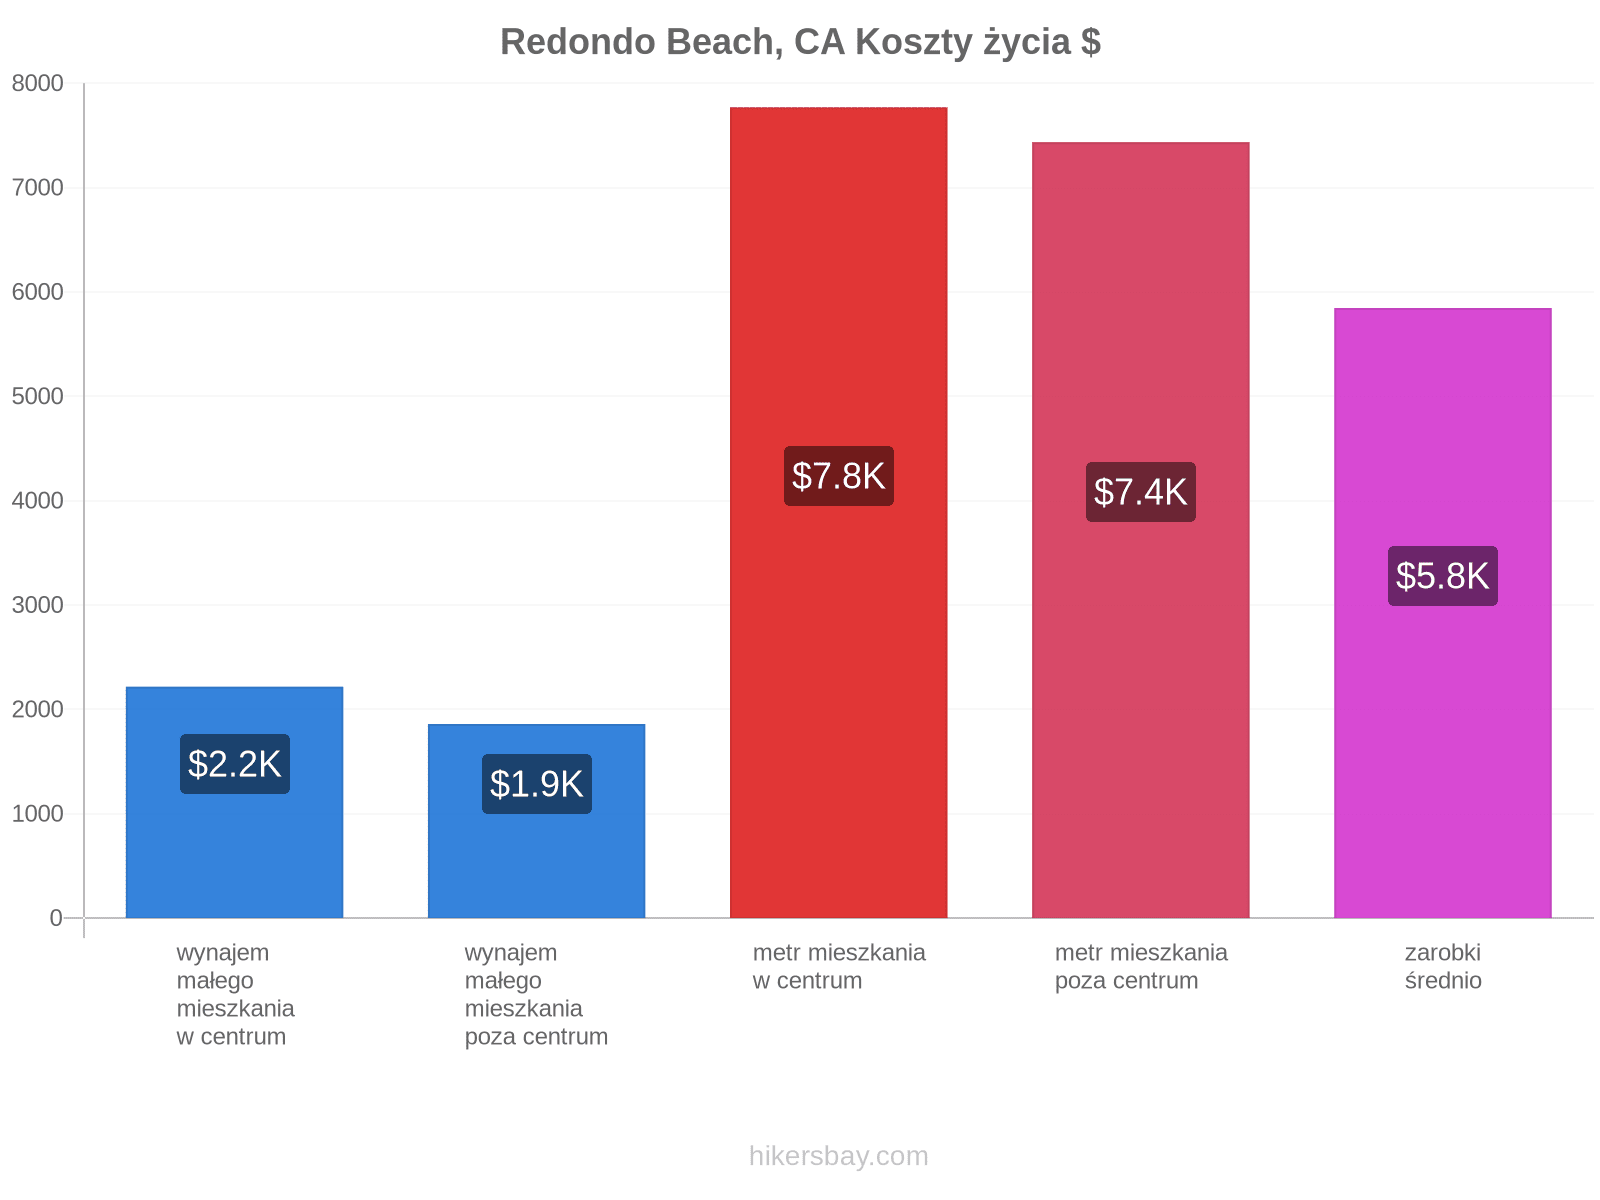 Redondo Beach, CA koszty życia hikersbay.com